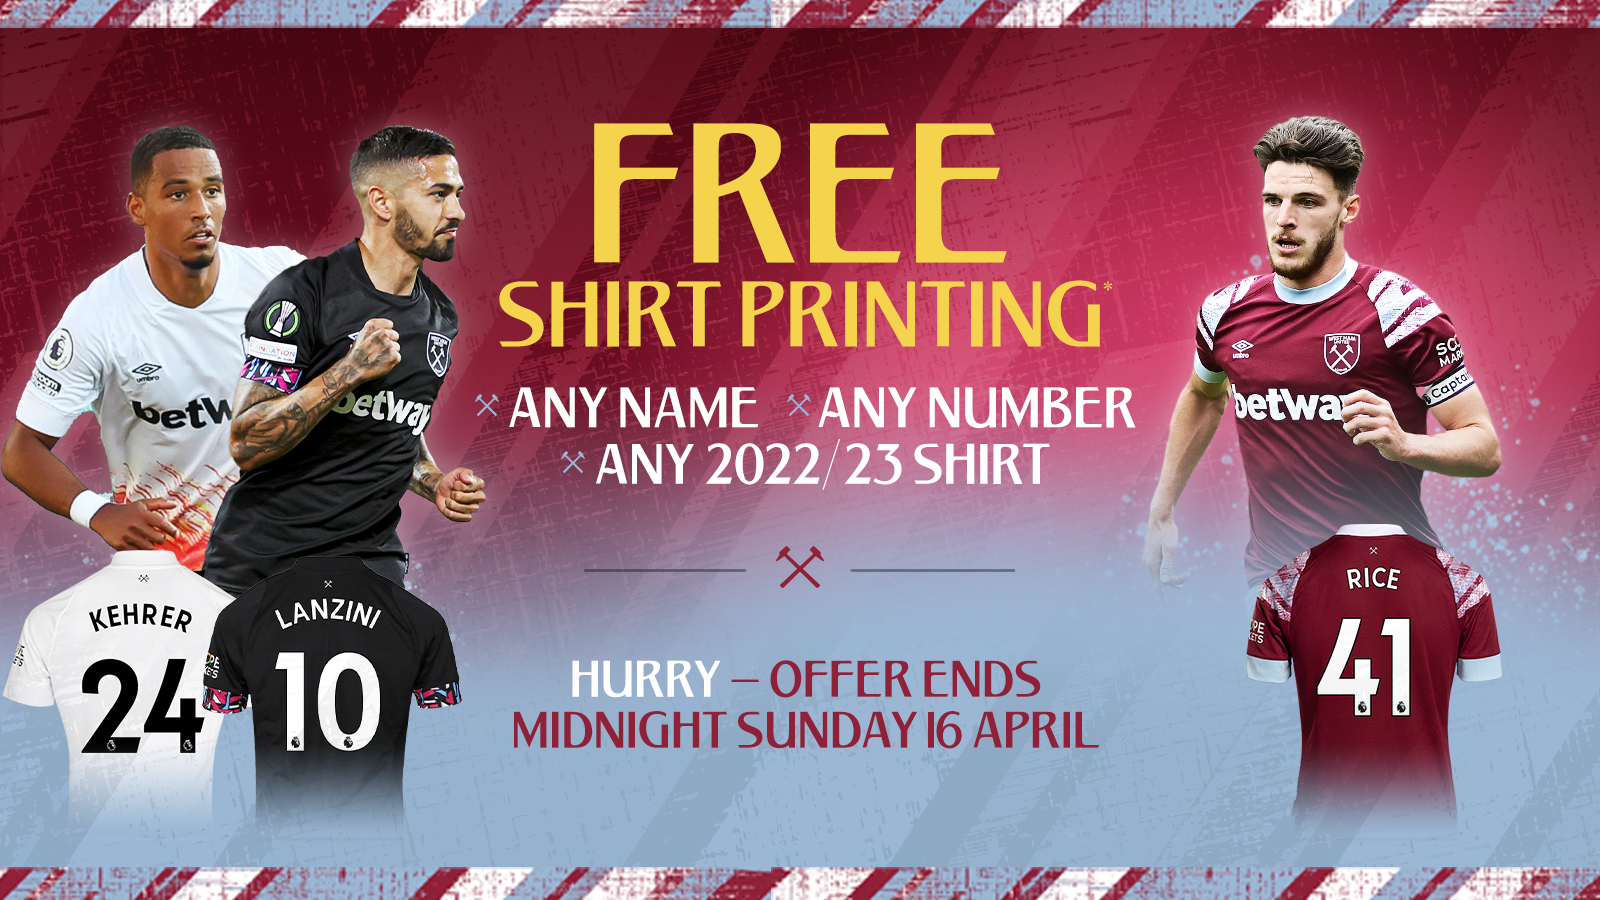 Free printing offer